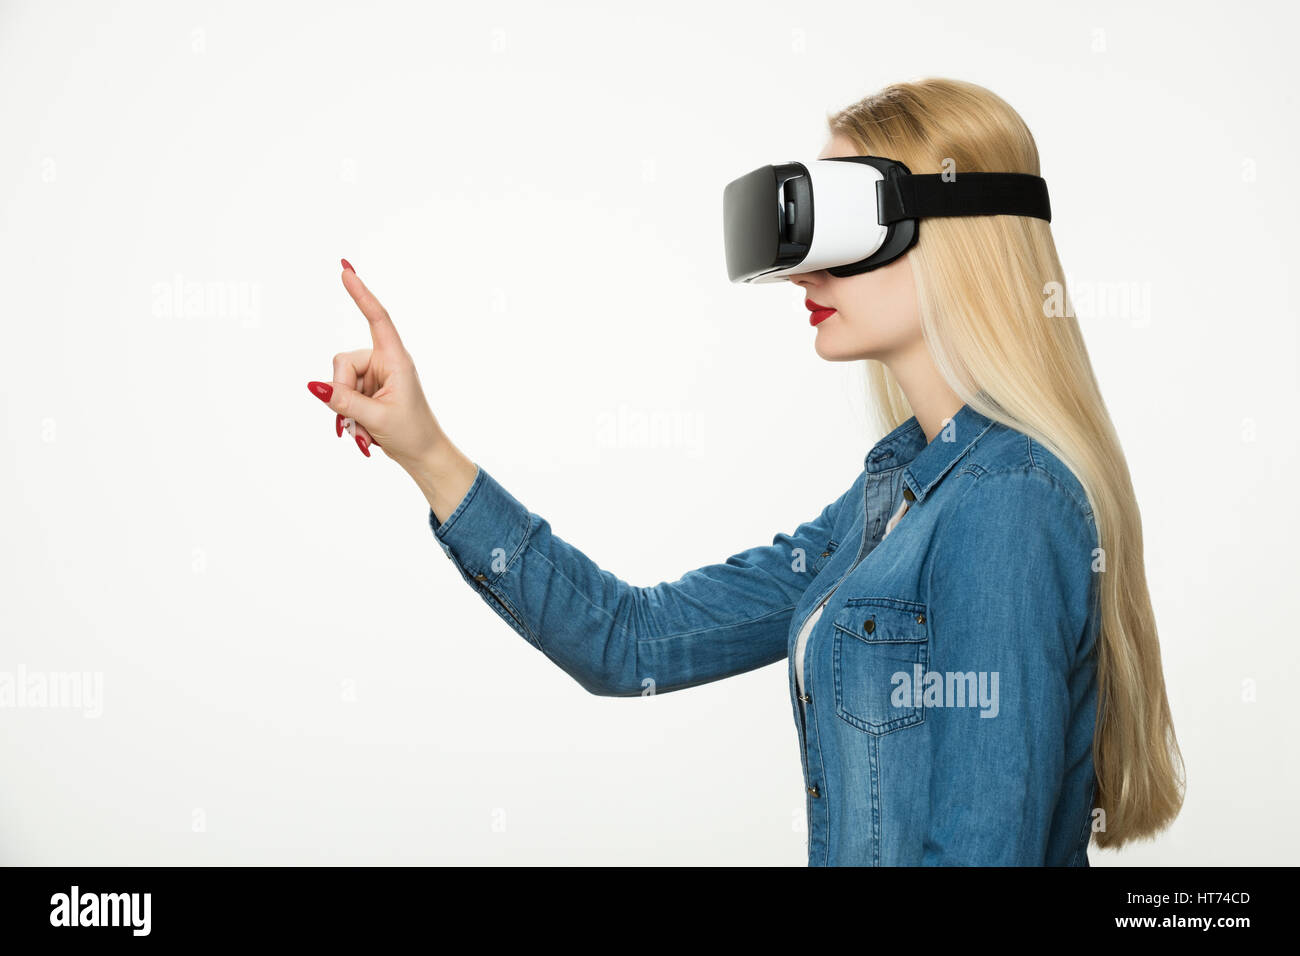 Woman Wearing Virtual Reality Glasses. Smartphone Using 